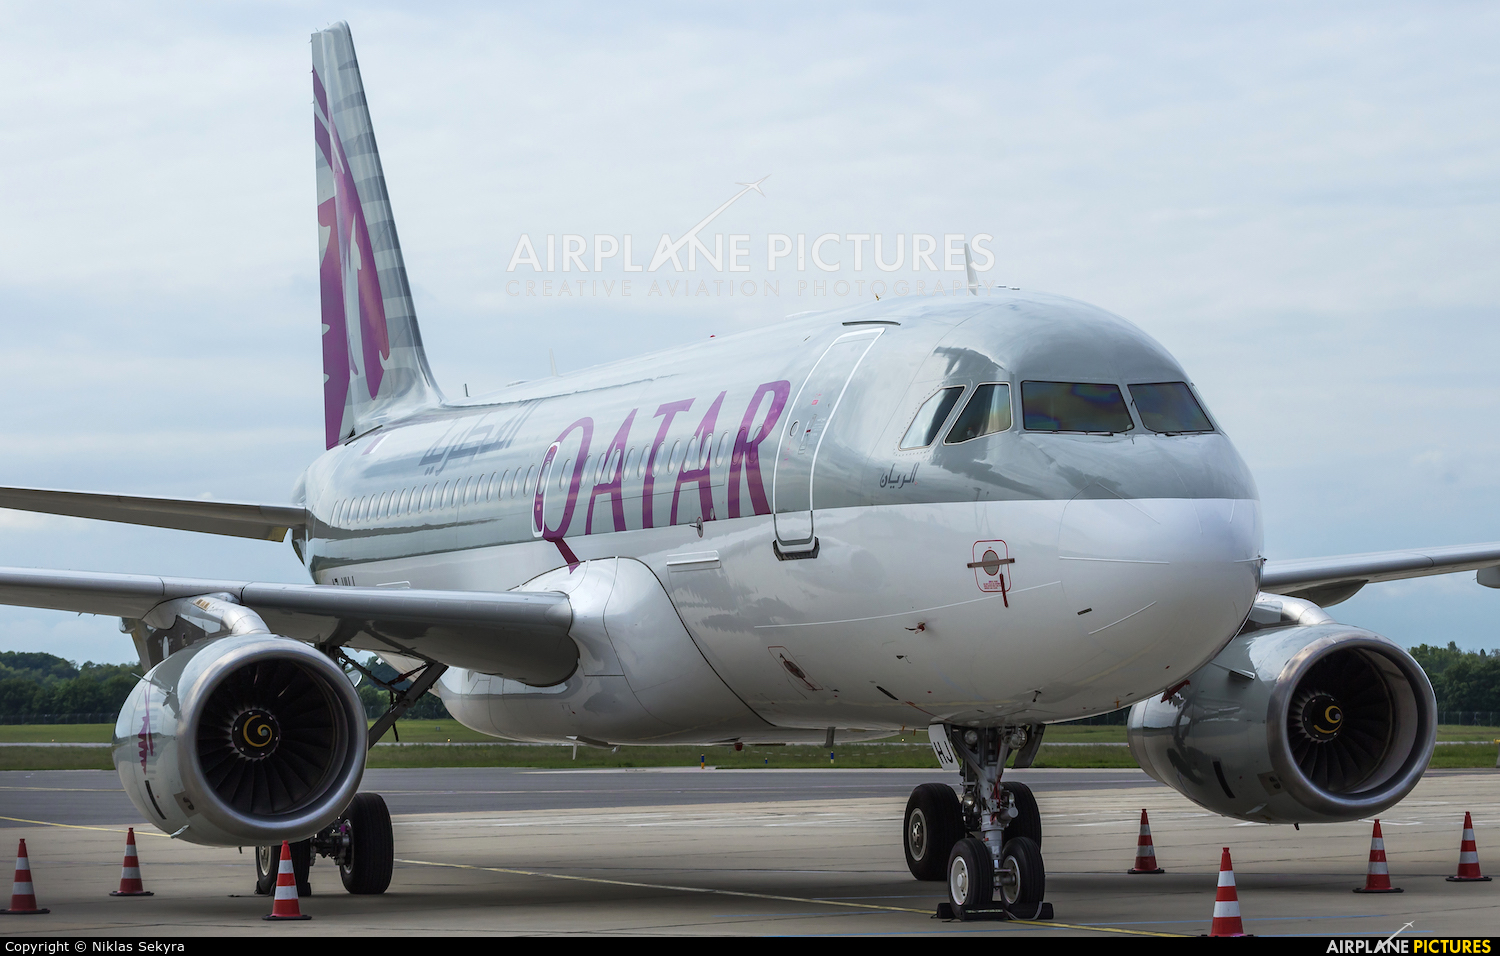 Qatar Amiri Flight A7-HHJ aircraft at Vienna - Schwechat